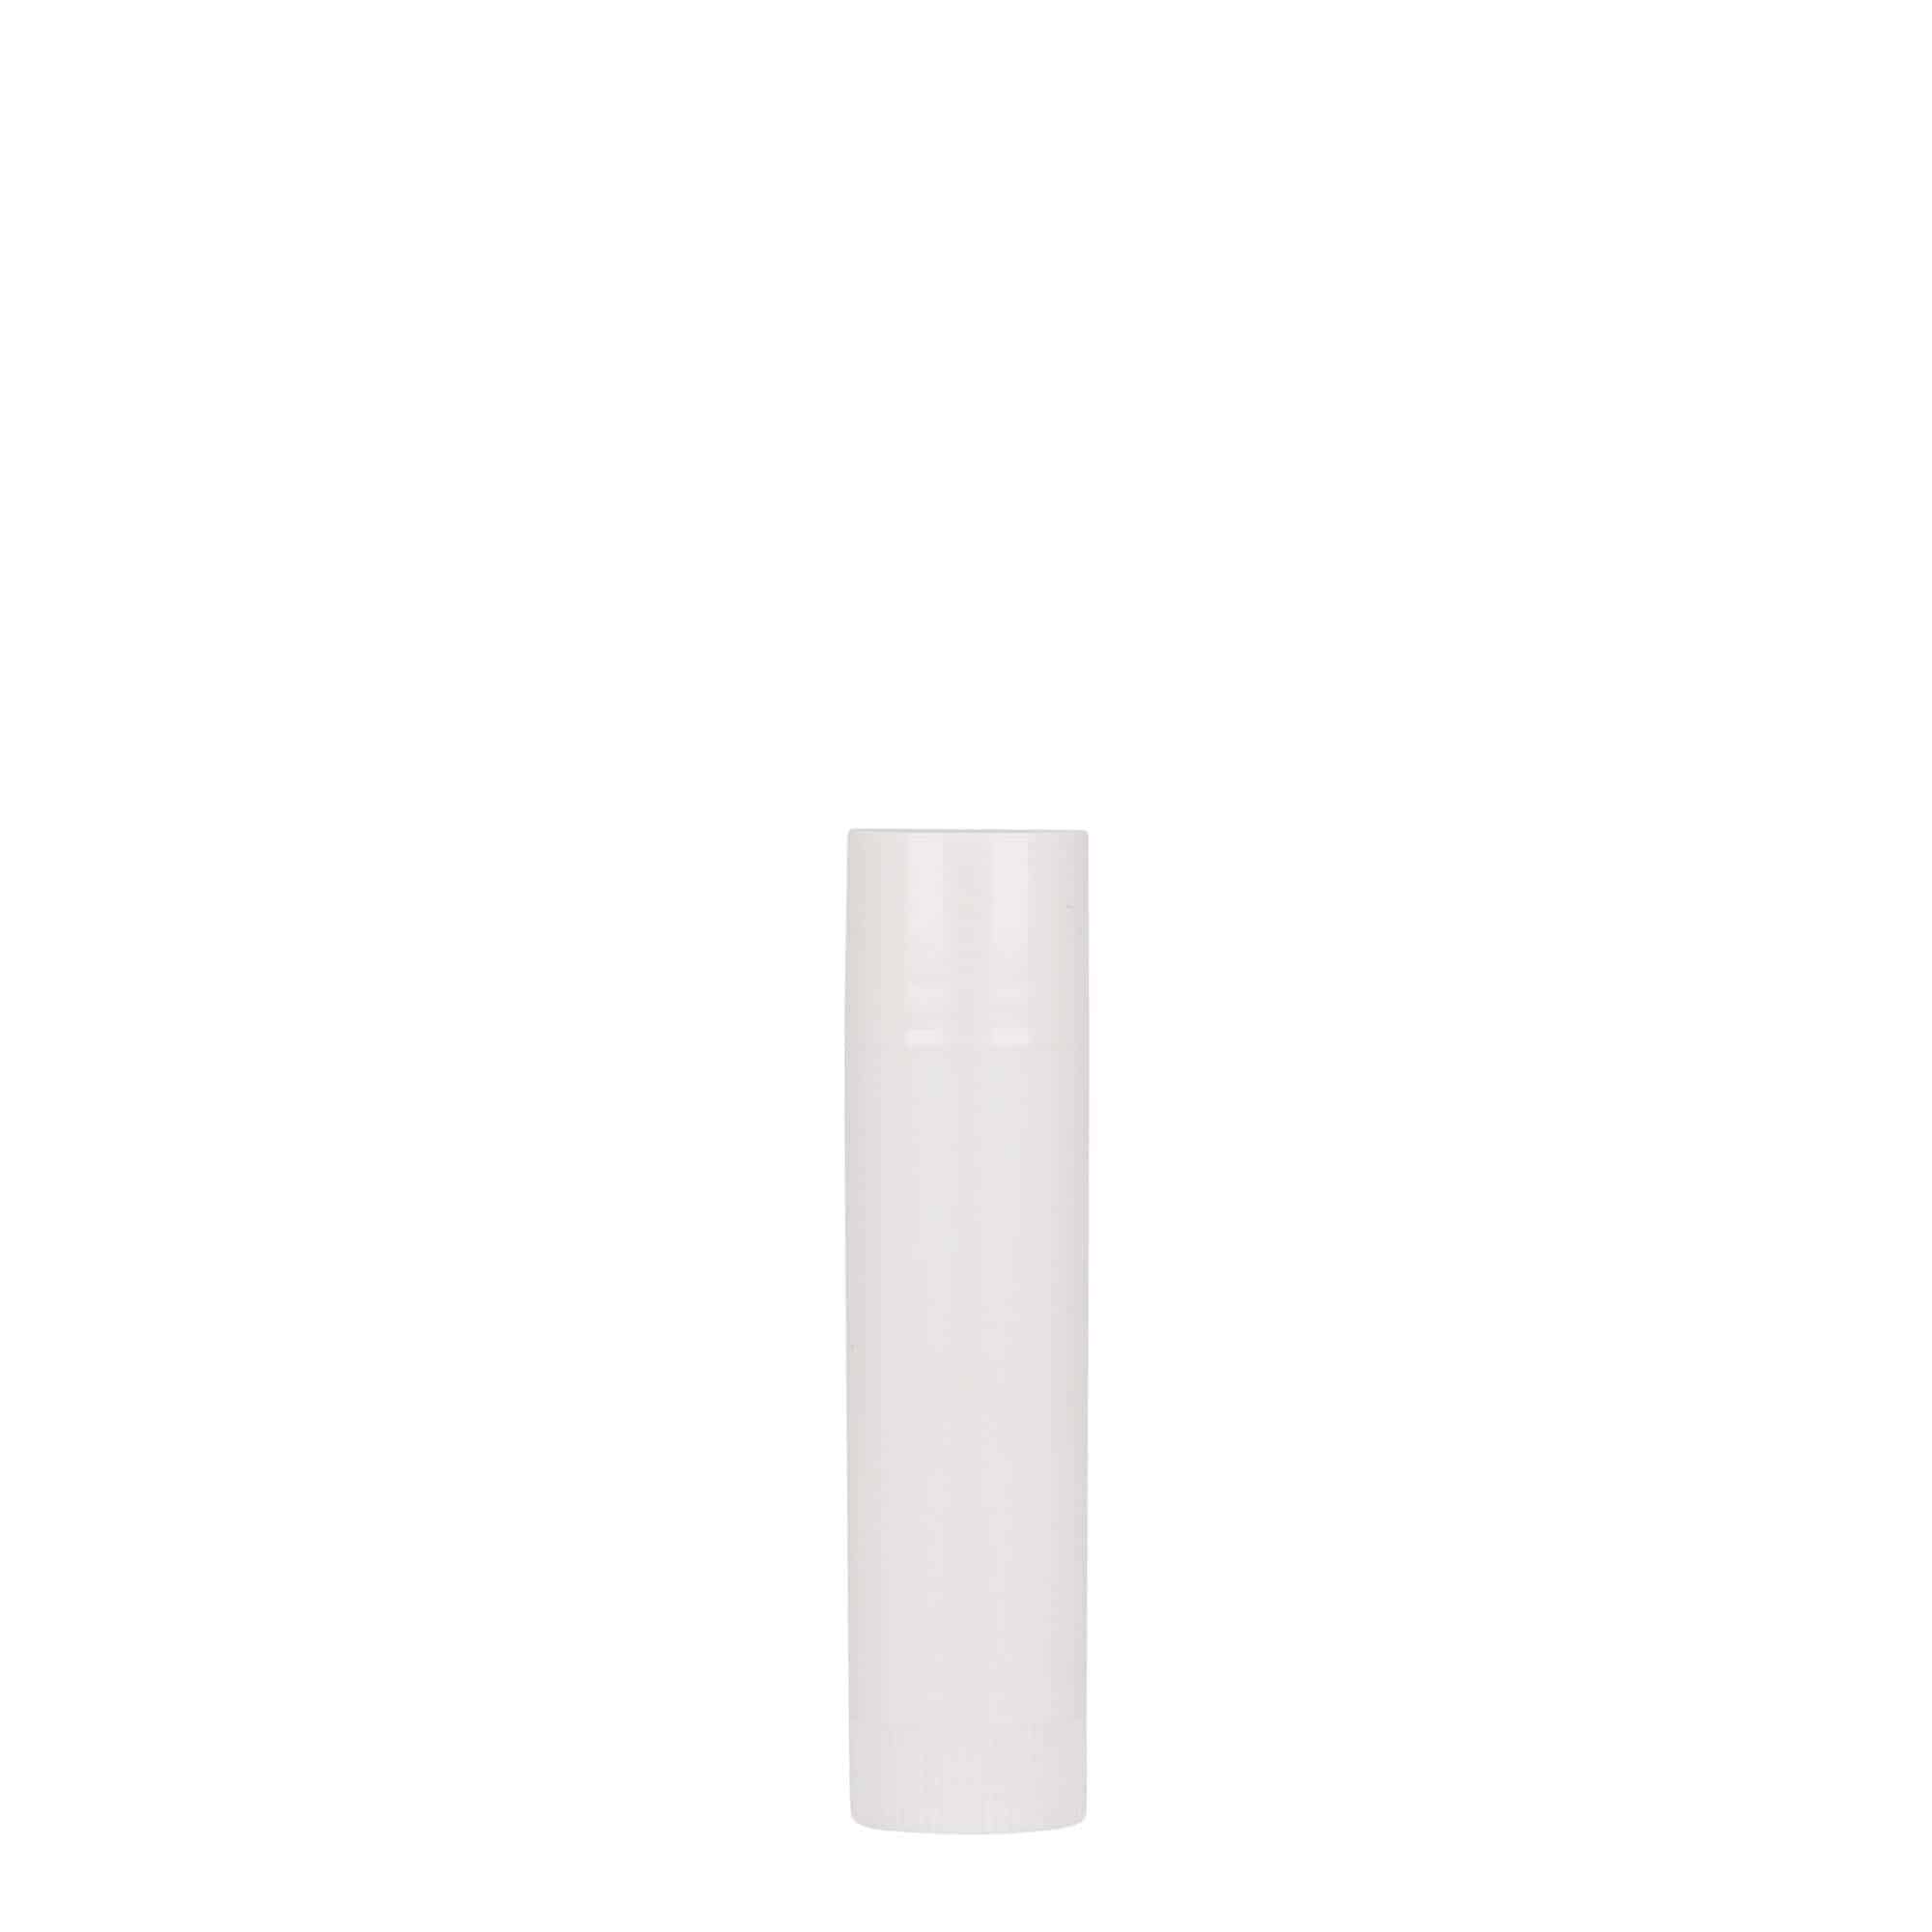 6 ml Lippenstifthülse, PP-Kunststoff, weiß